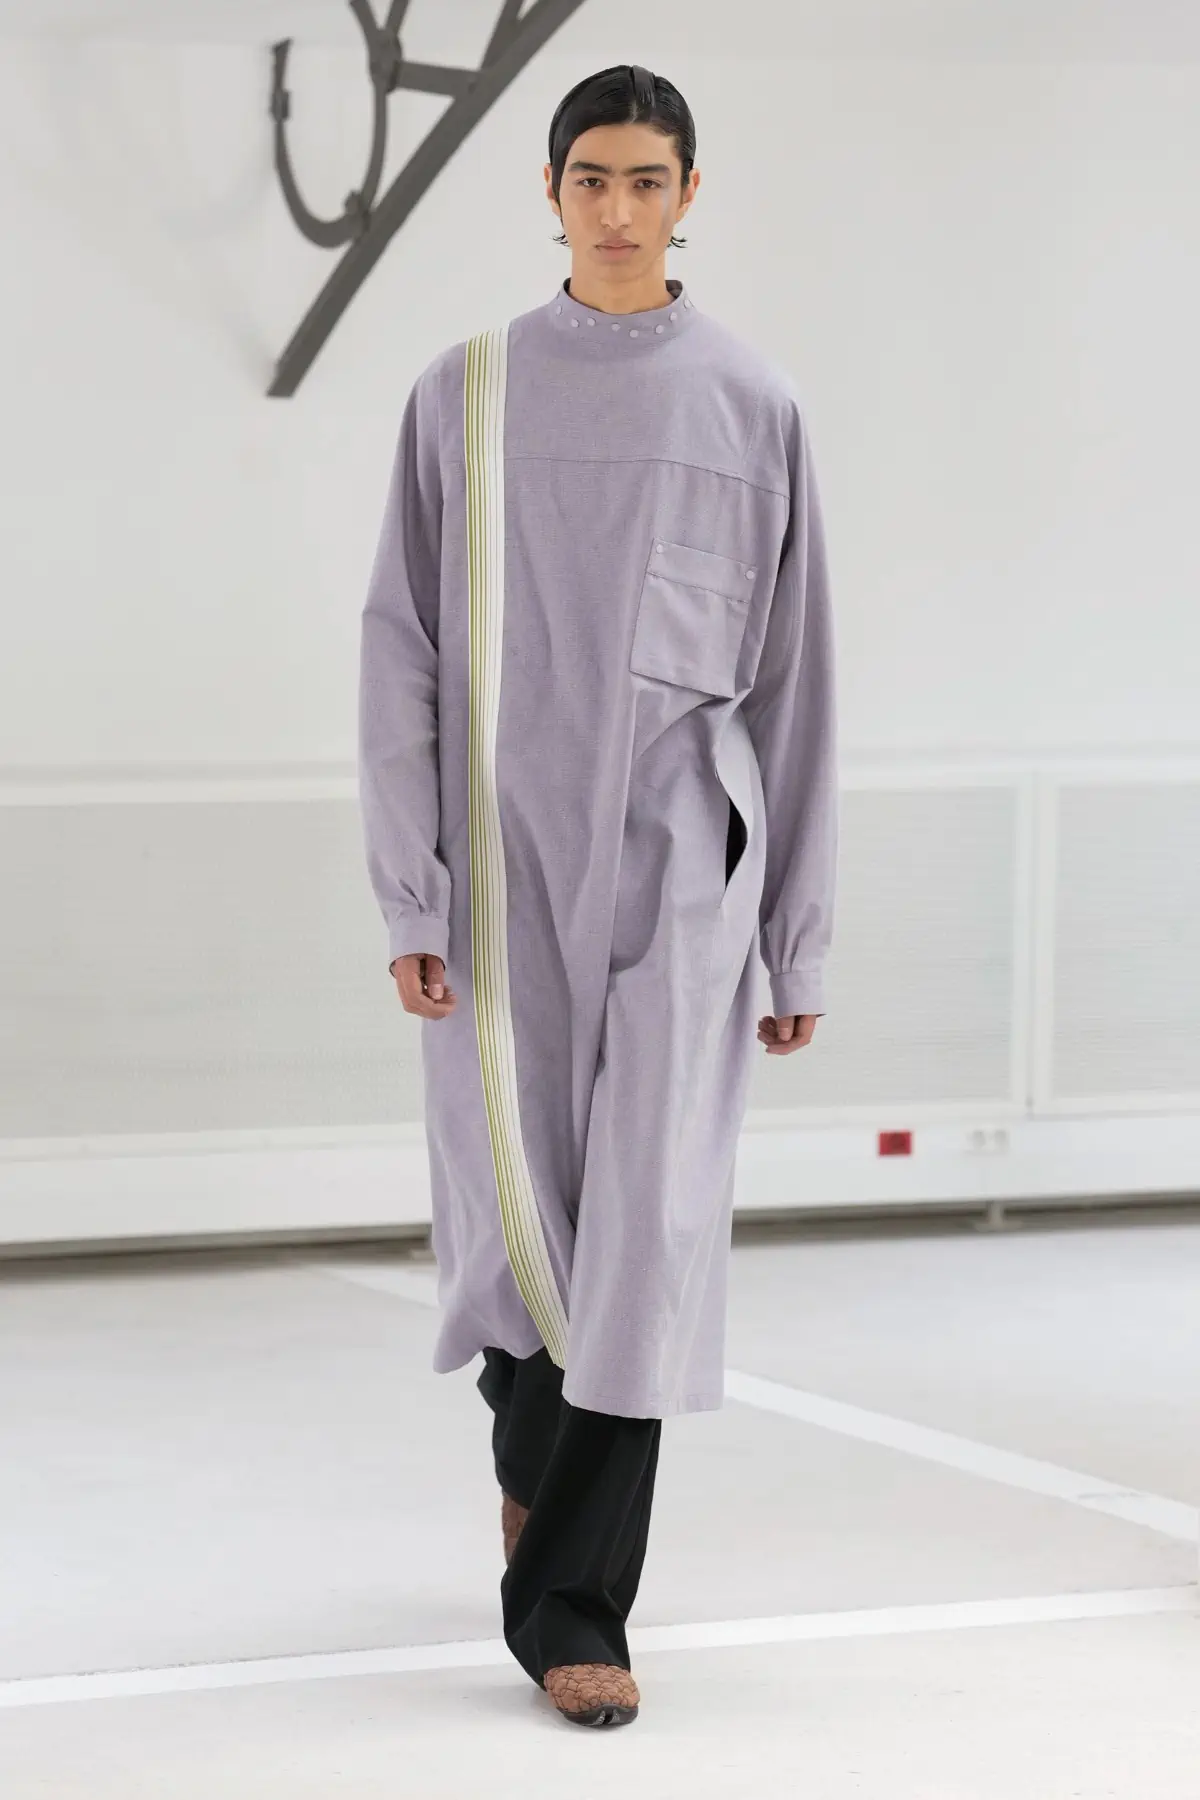 KIKO KOSTADINOV's Spring 2025 collection explores the intersection of health and fashion